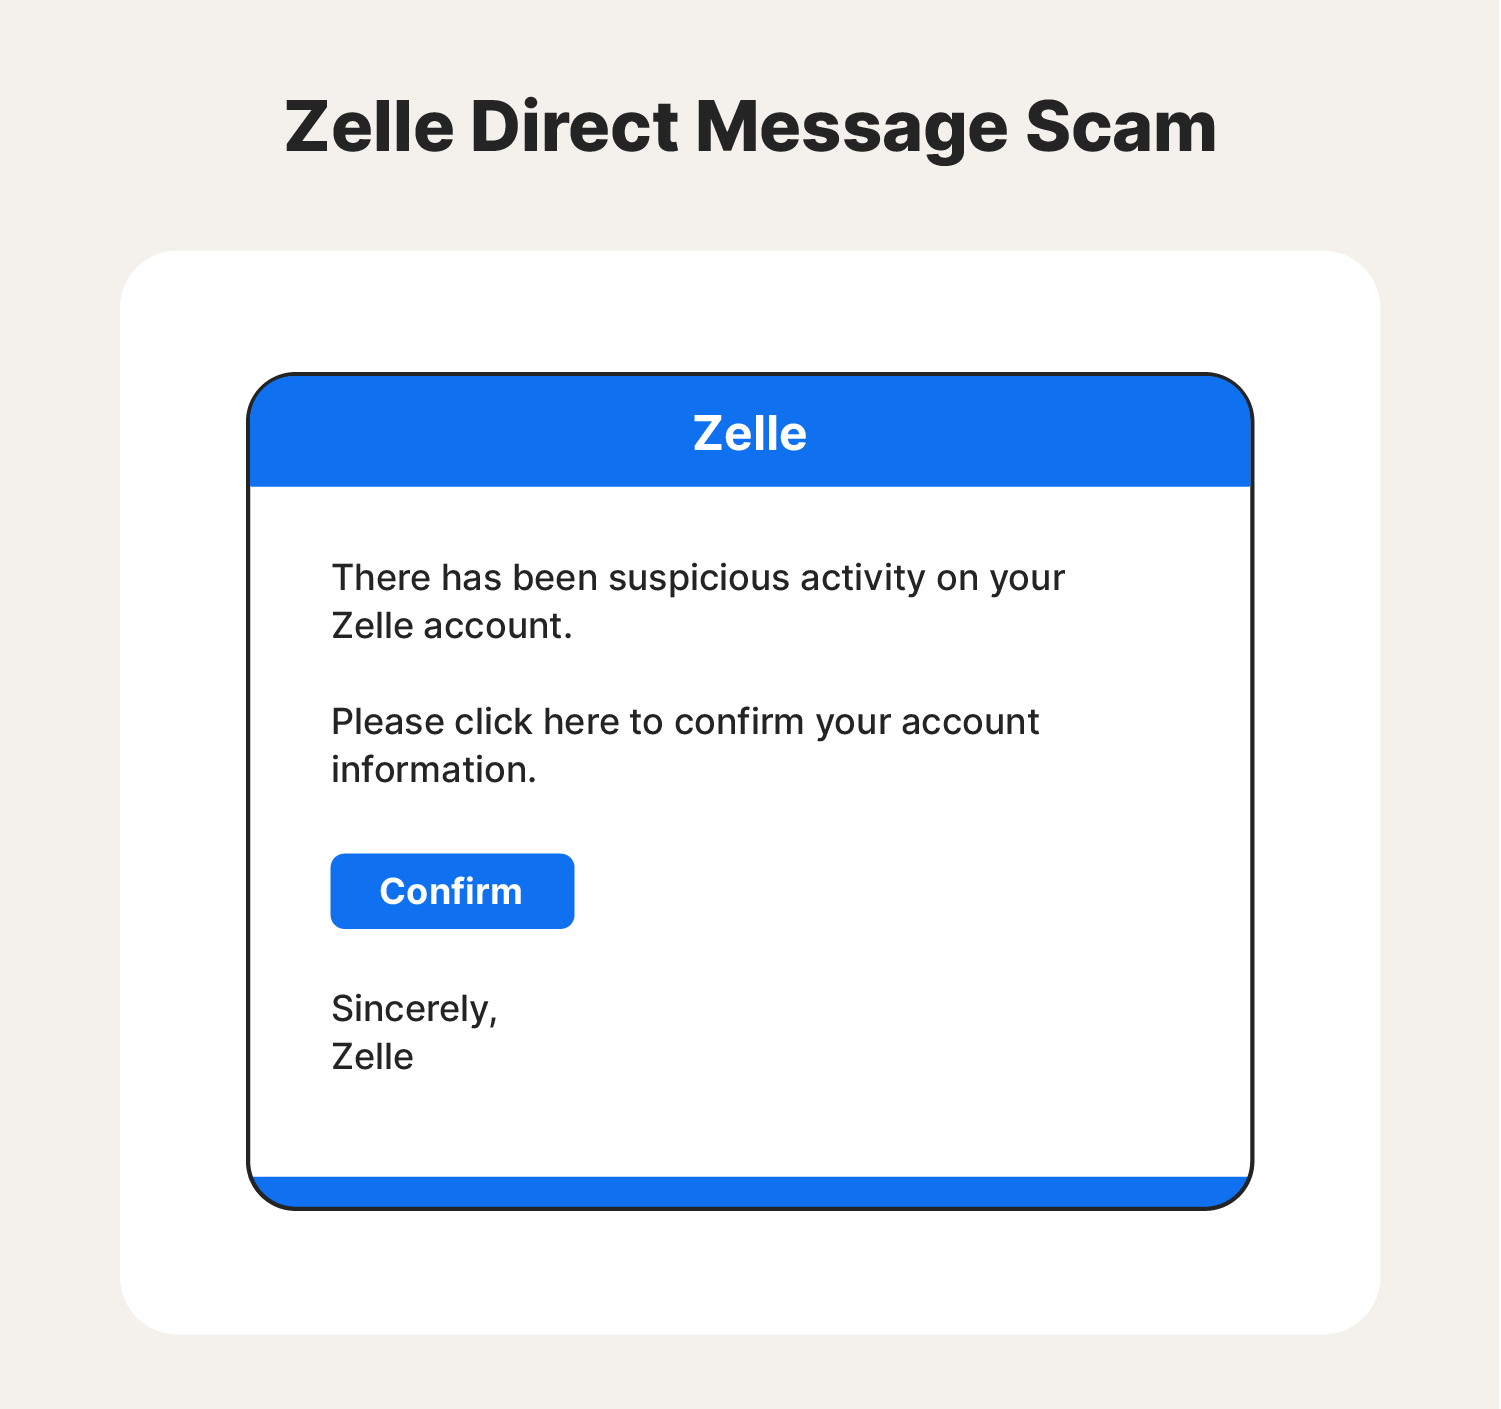 An illustration of a Zelle direct message scam screenshot.